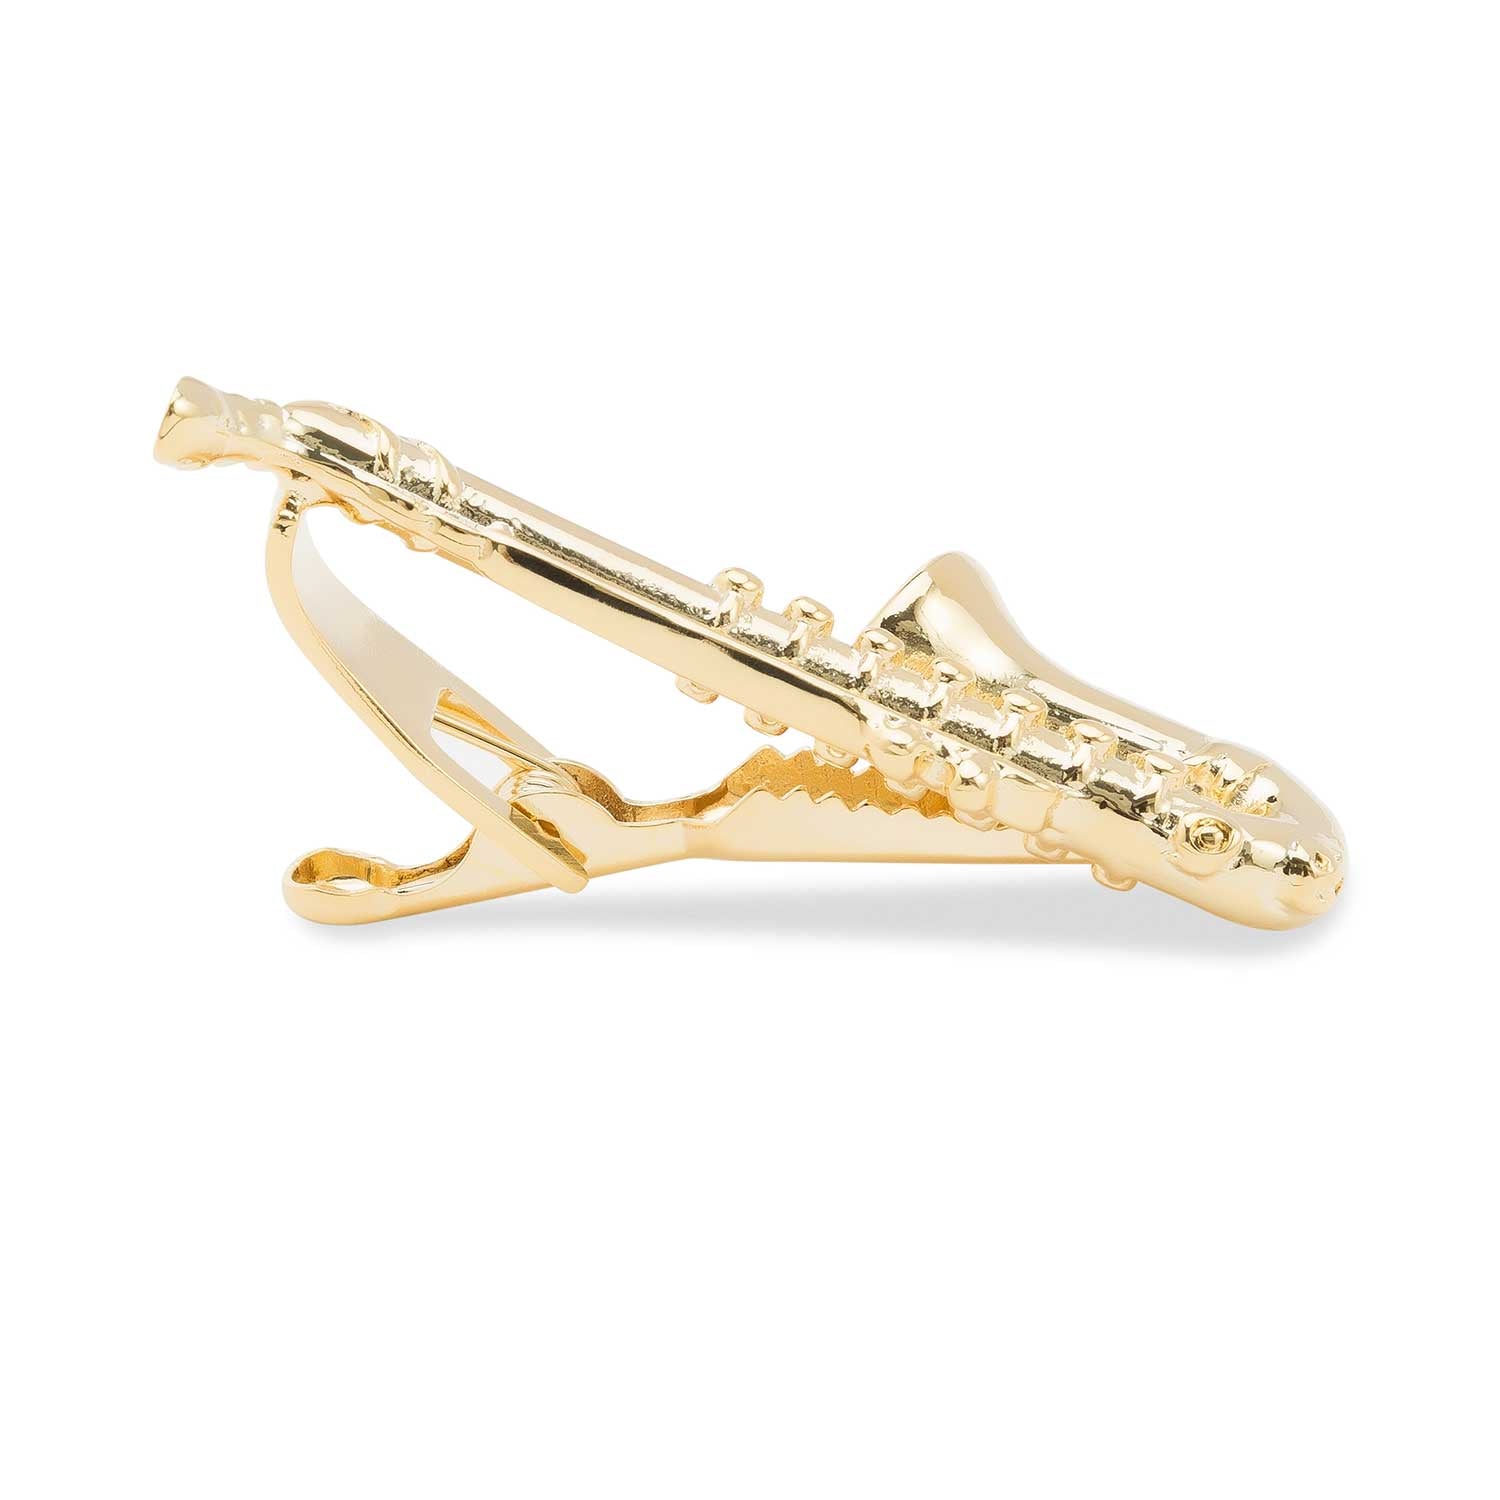 Gold Saxophone Tie Bars